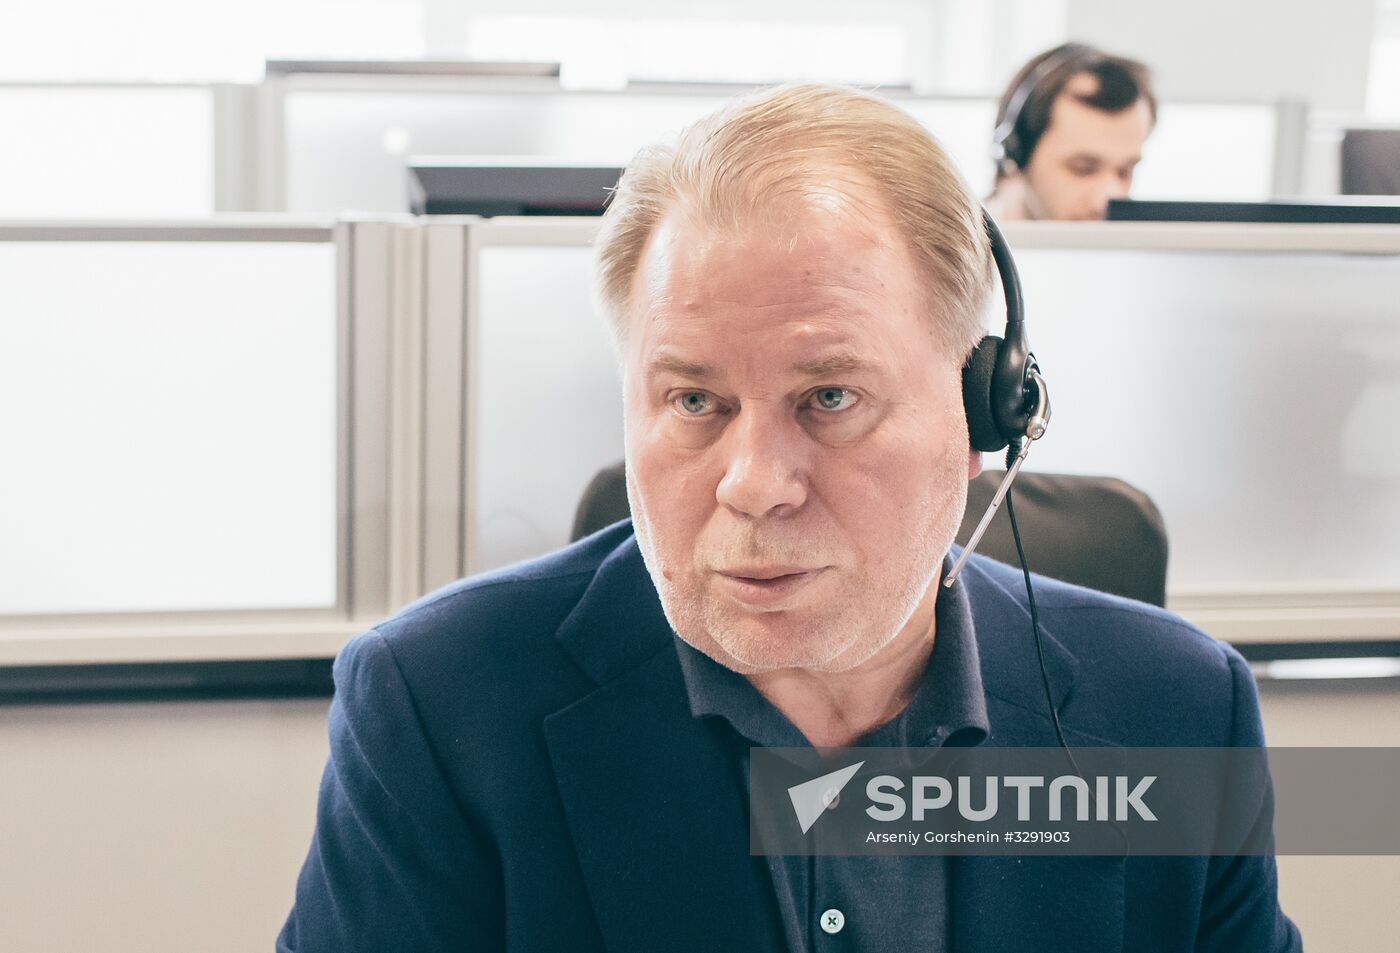 President Vladimir Putin's authorized representatives receive hotline calls